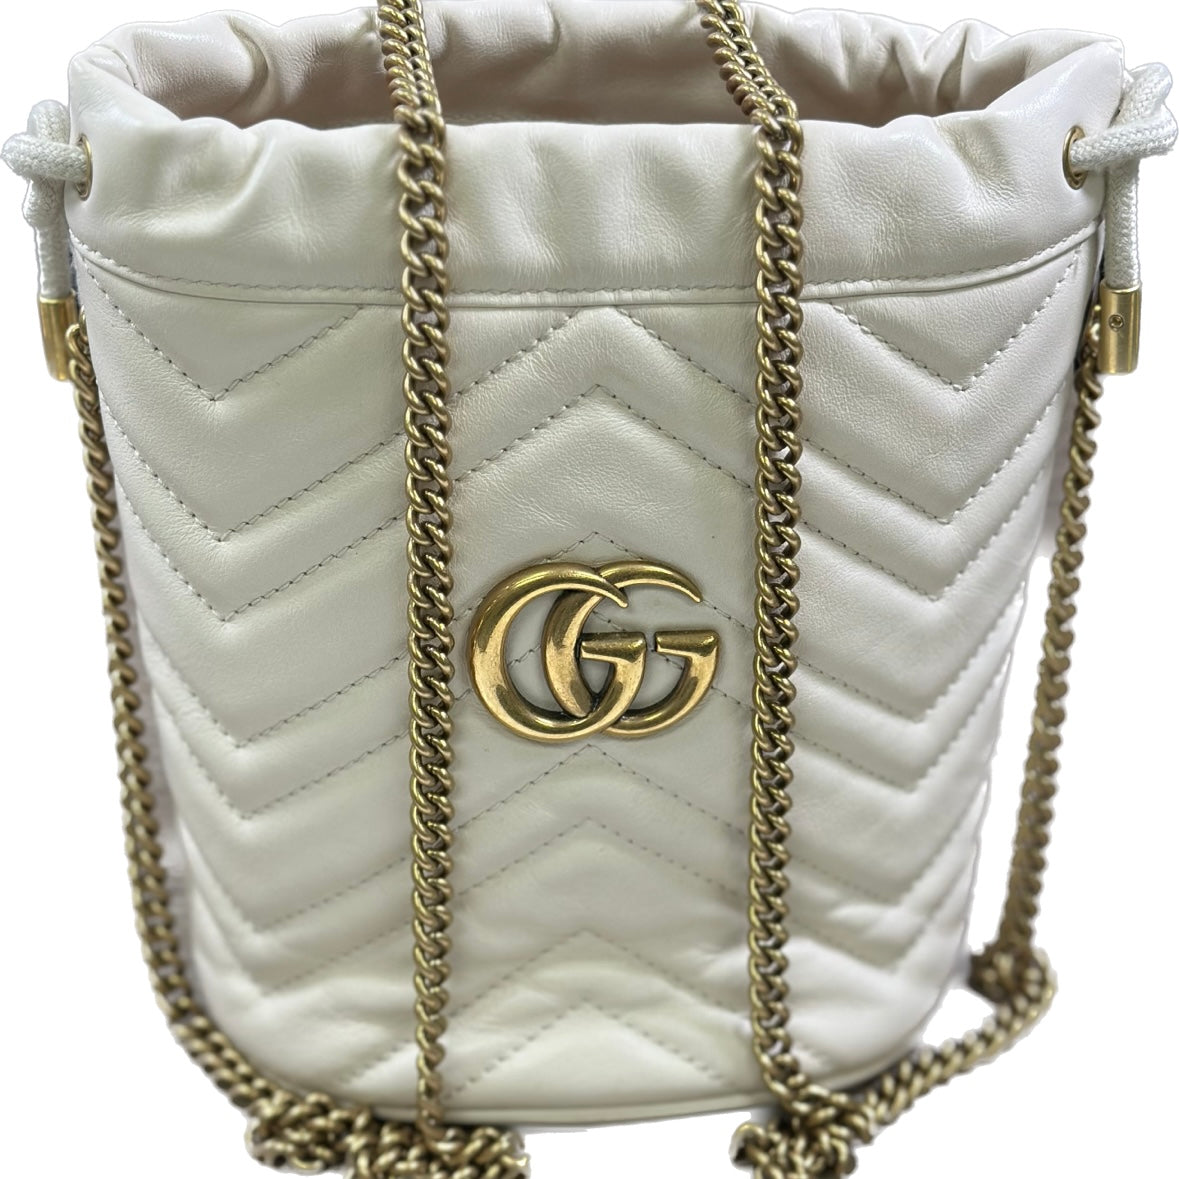 Gucci Marmont Handbags for sale in Korat, Thailand